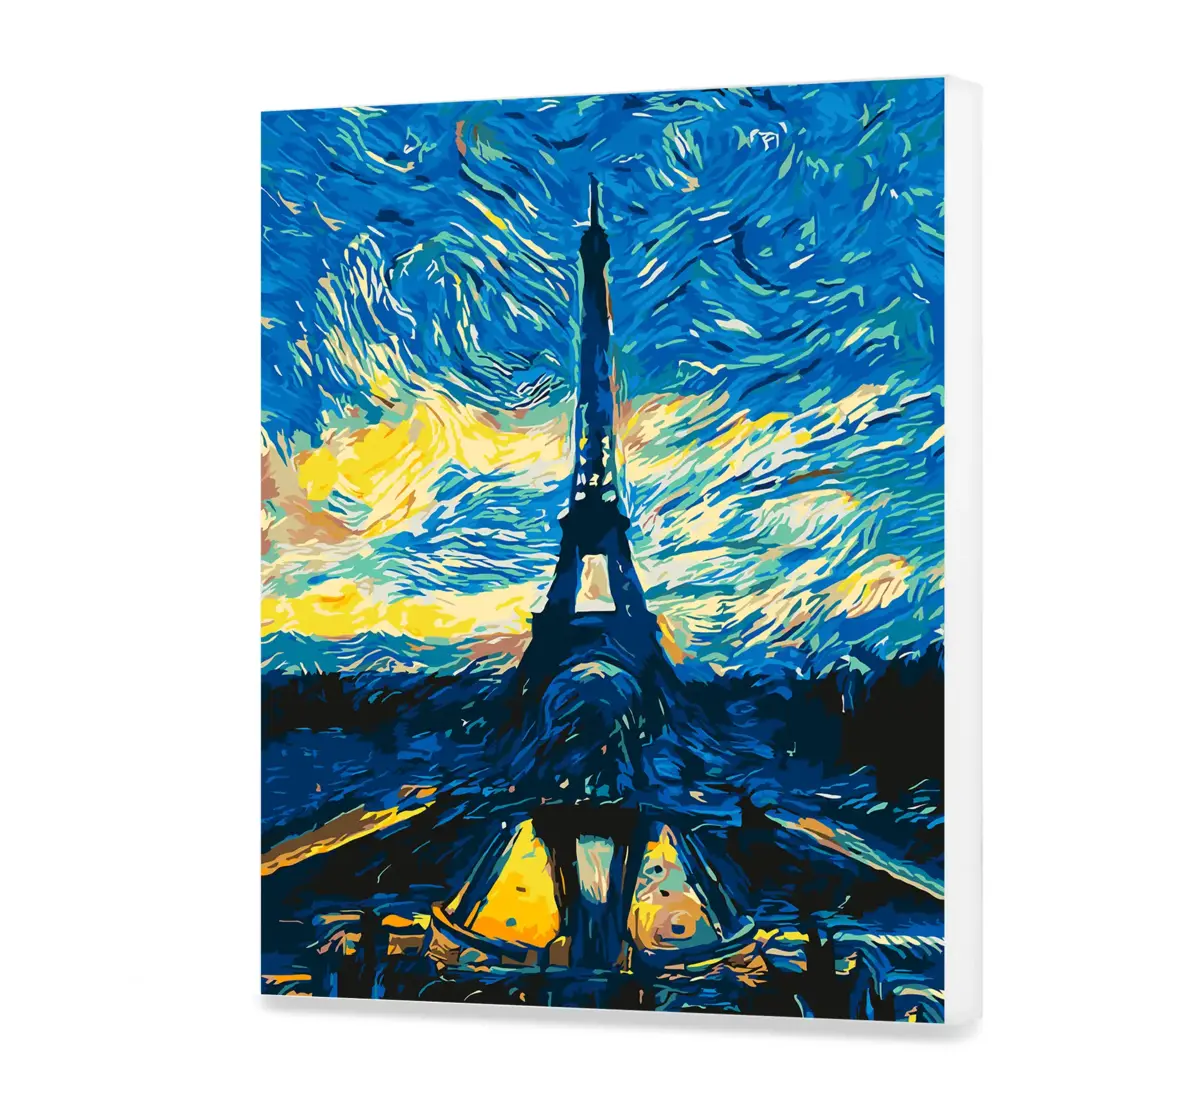 Starry Night In Paris